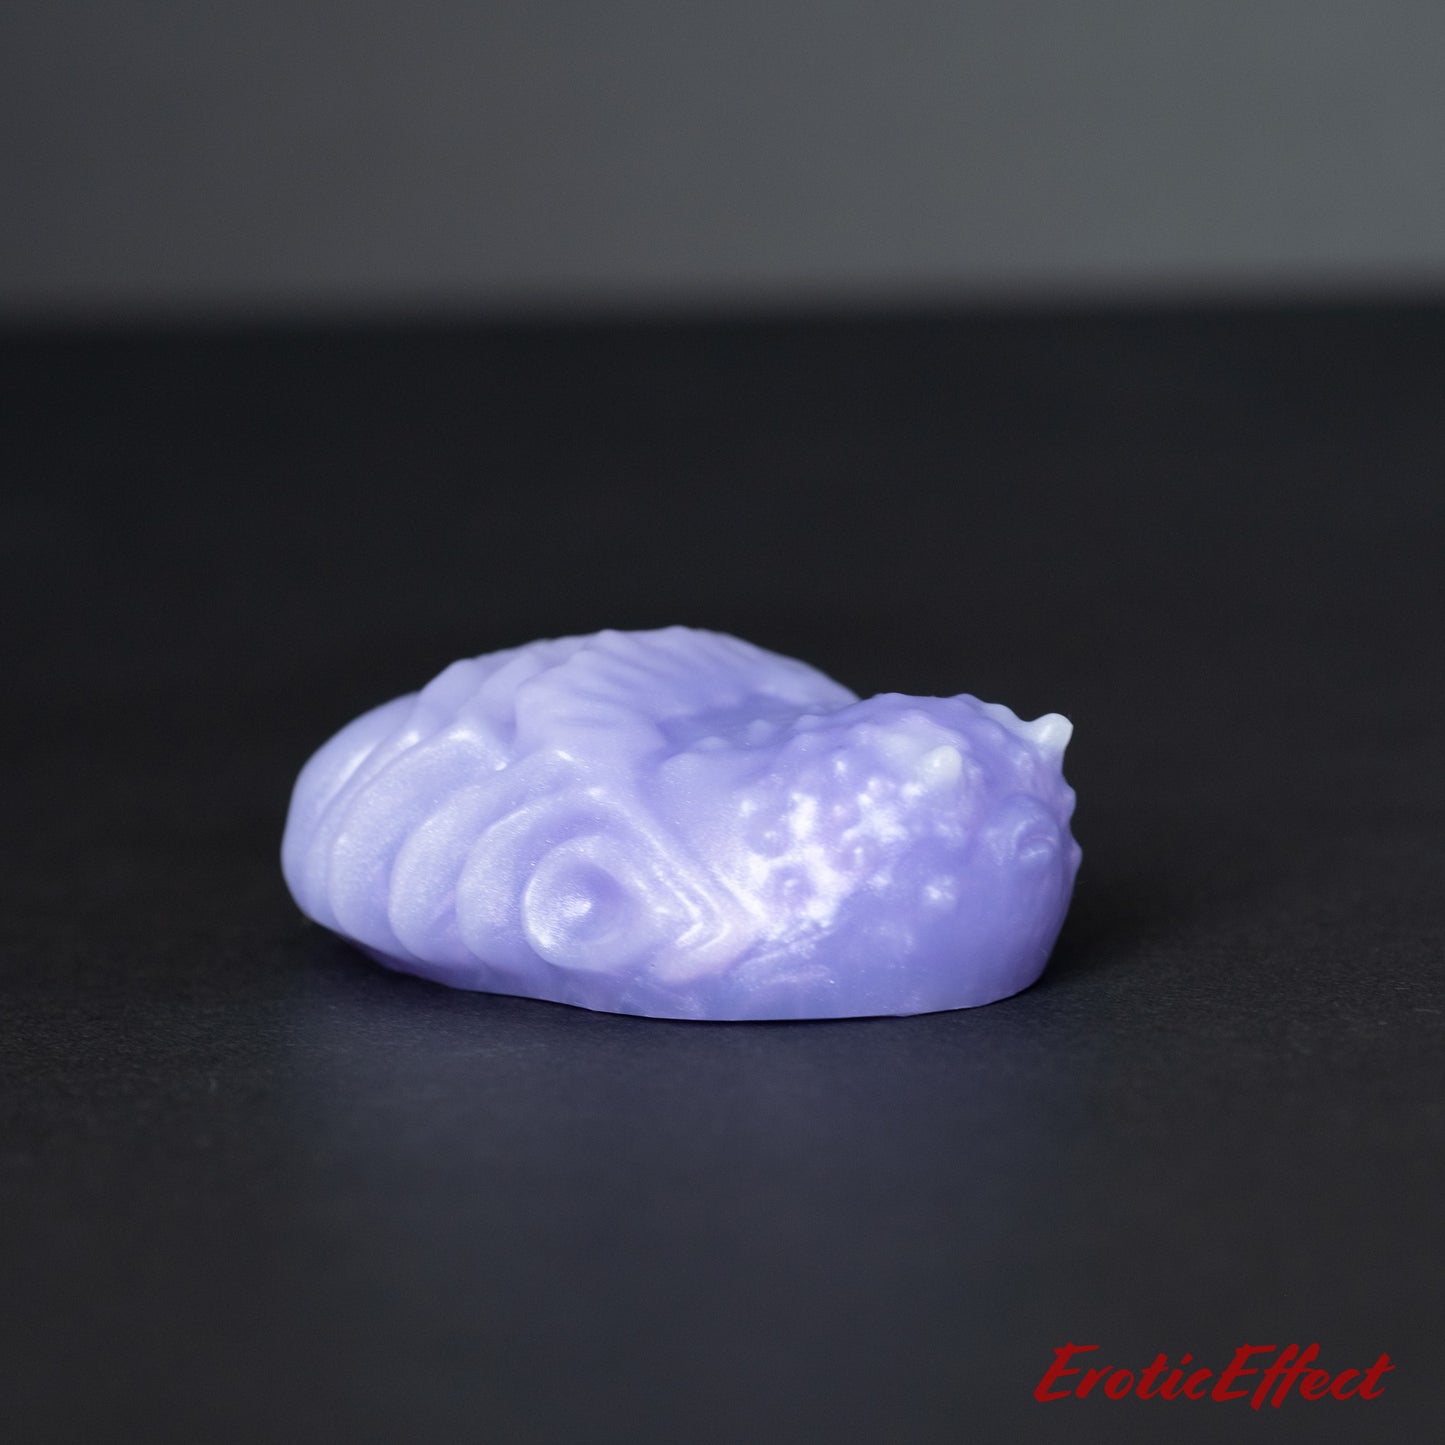 Edgar Silicone Grindable/Squishy - Medium Firmness - Lavender Shimmer